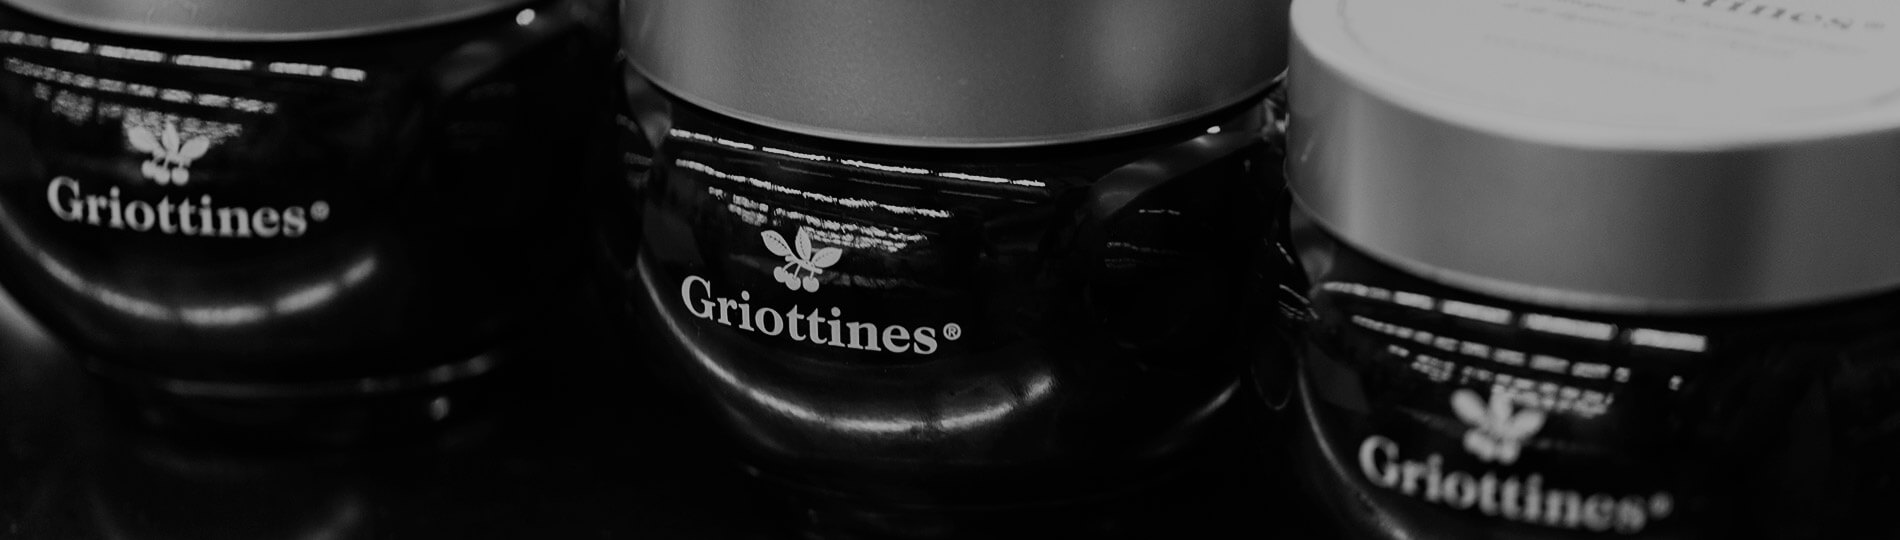 Griottines®